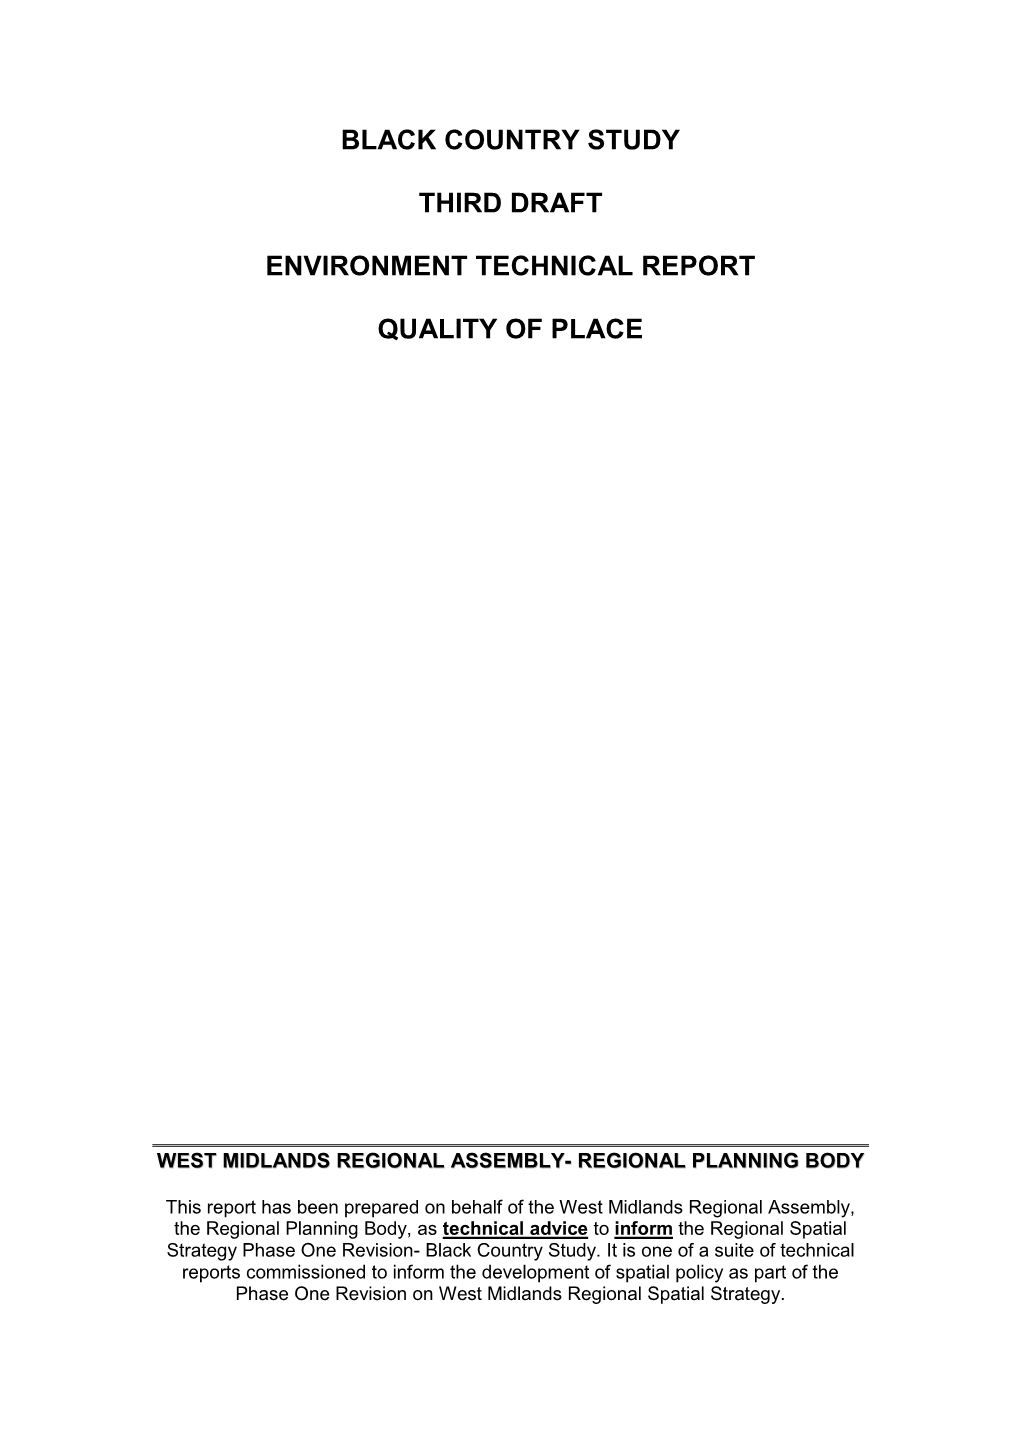 Environmental Technical Report